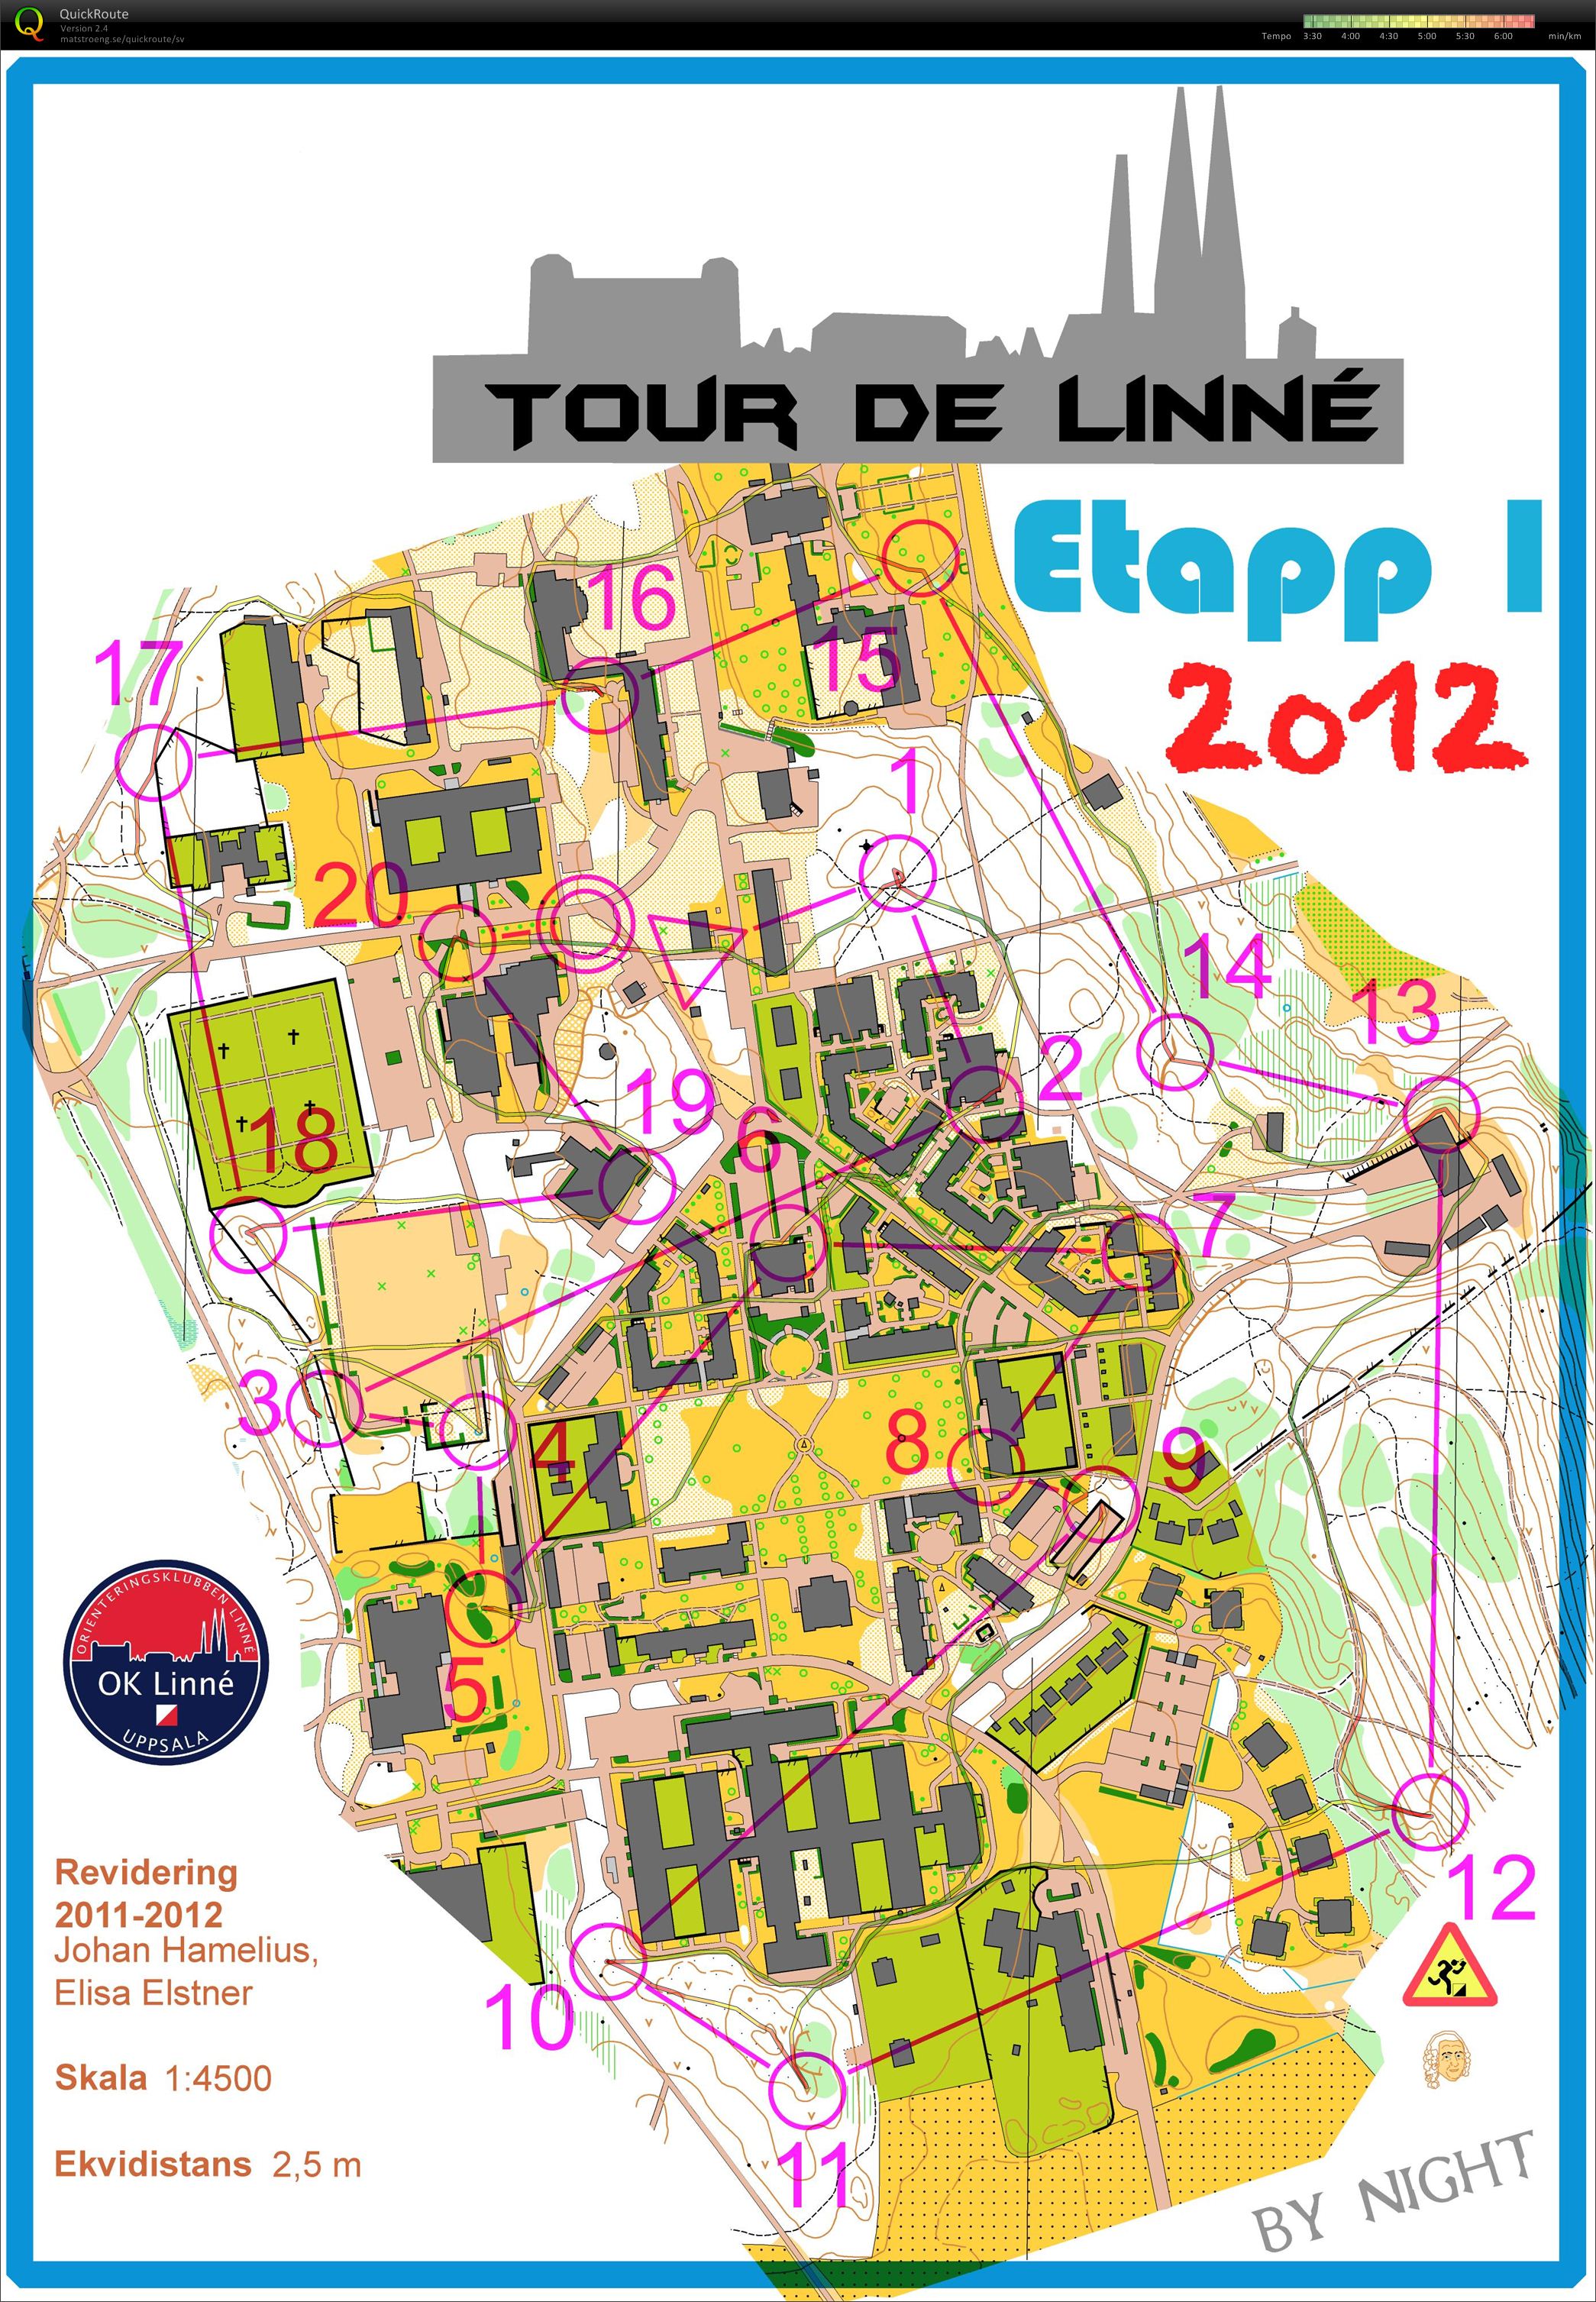 Tour de Linne - etapp 1 (2012-02-13)